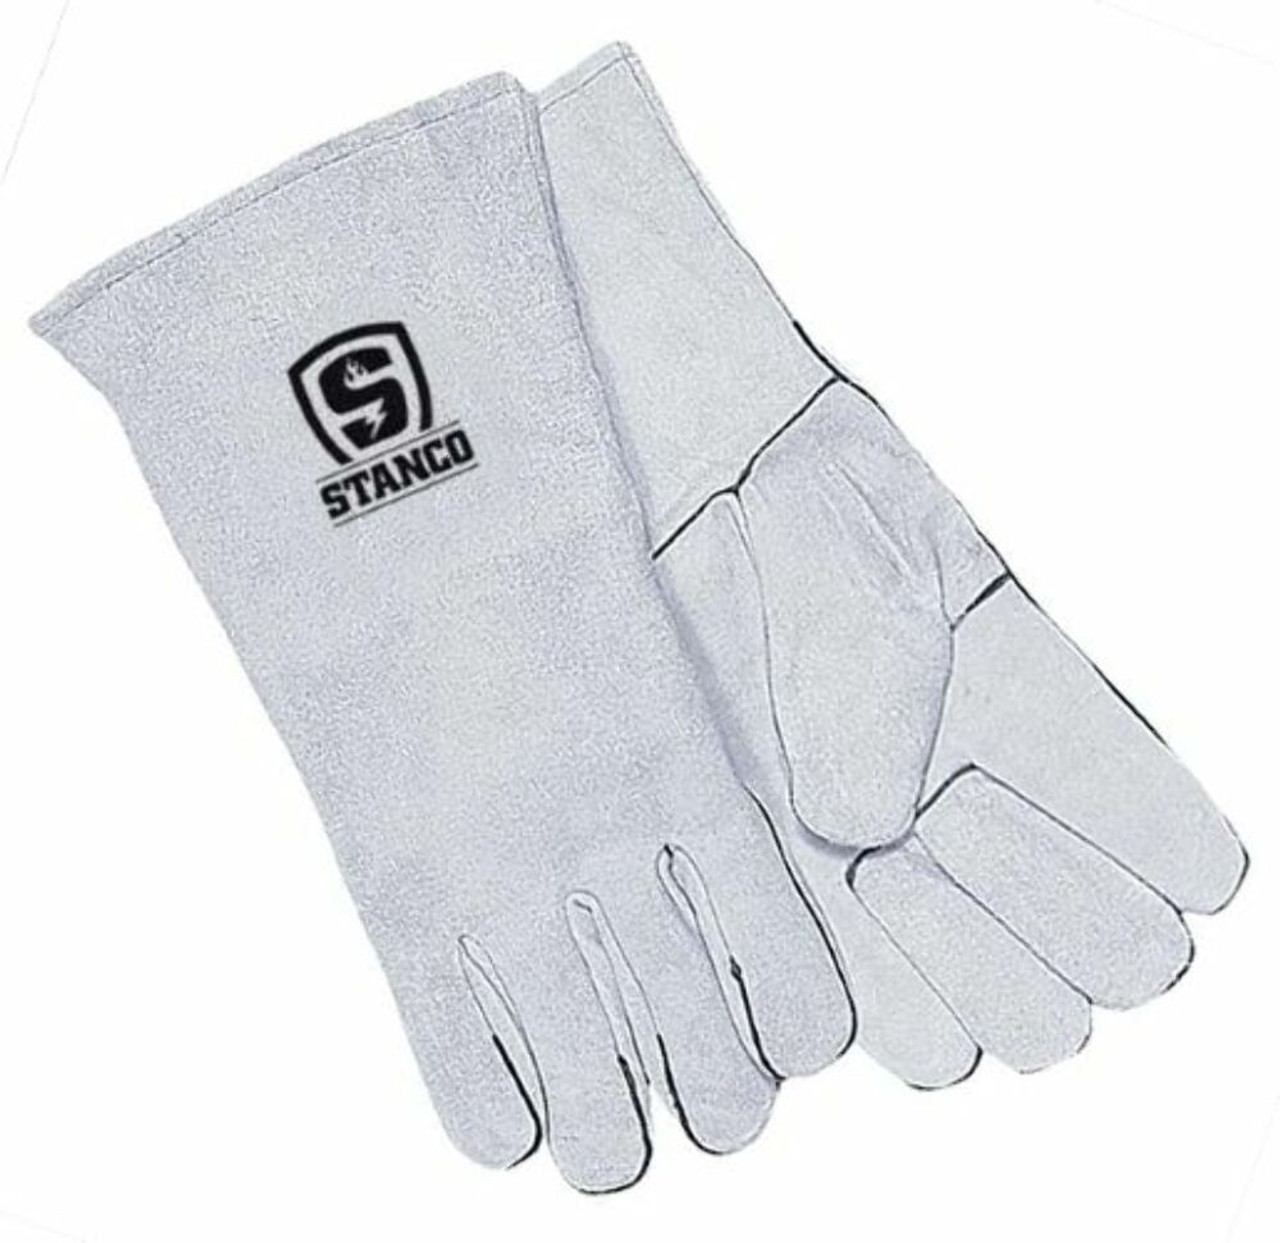 Stanco 2025 Welding Gloves Pearl Gray